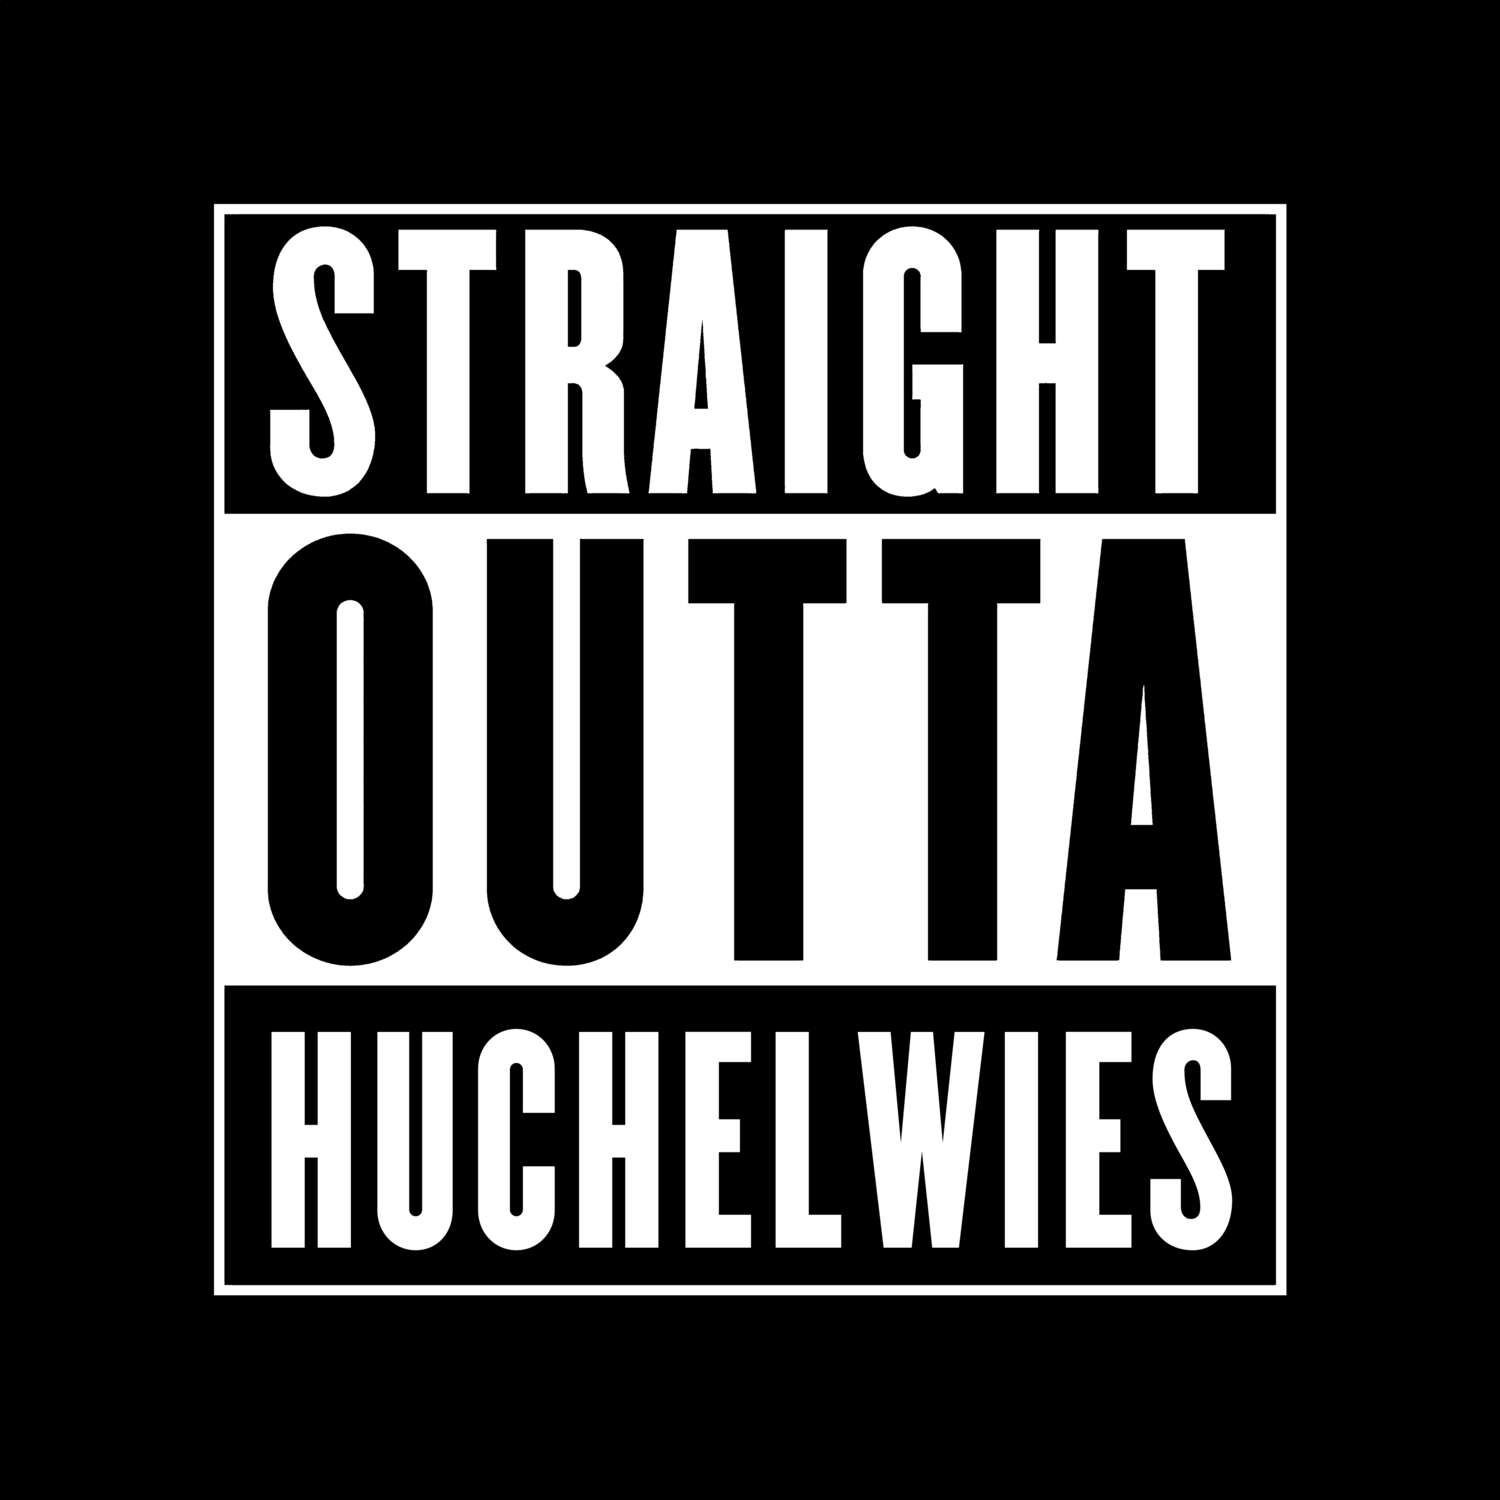 Huchelwies T-Shirt »Straight Outta«